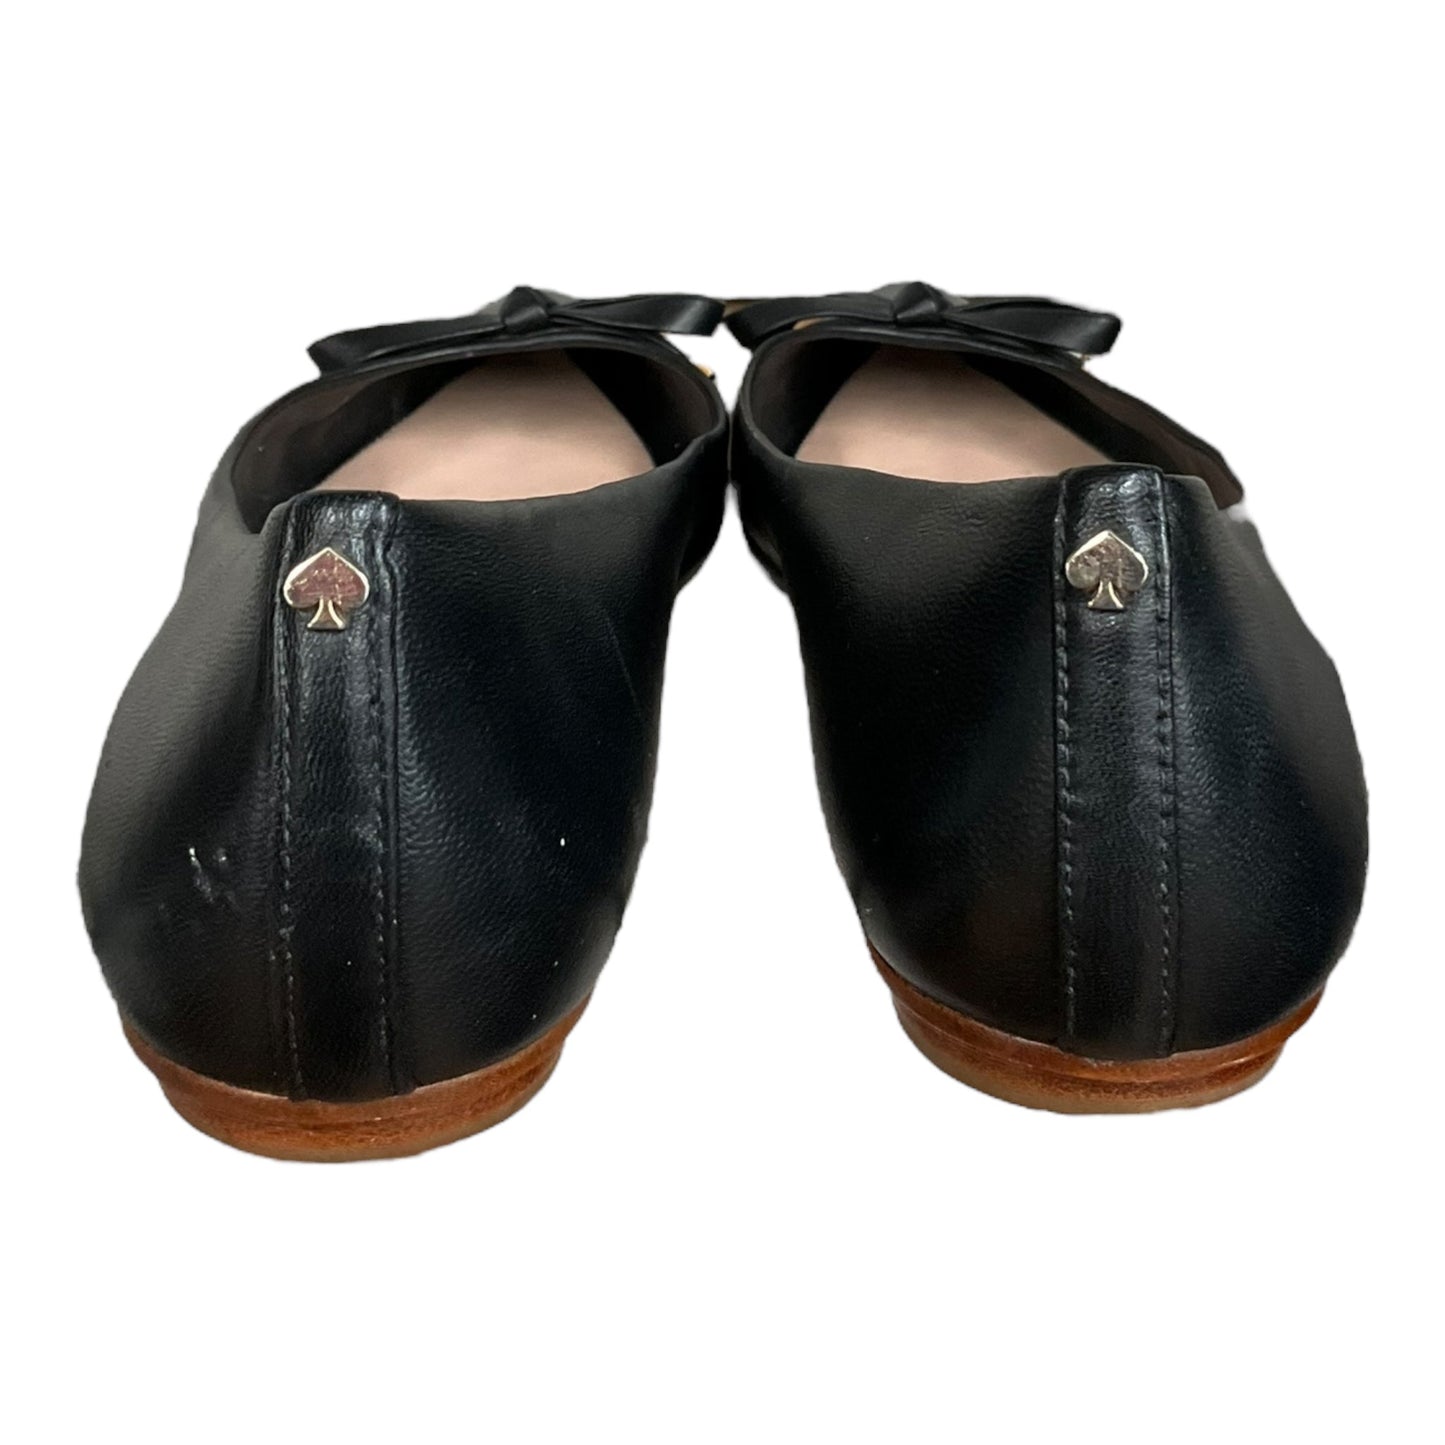 Black Shoes Flats Kate Spade, Size 10